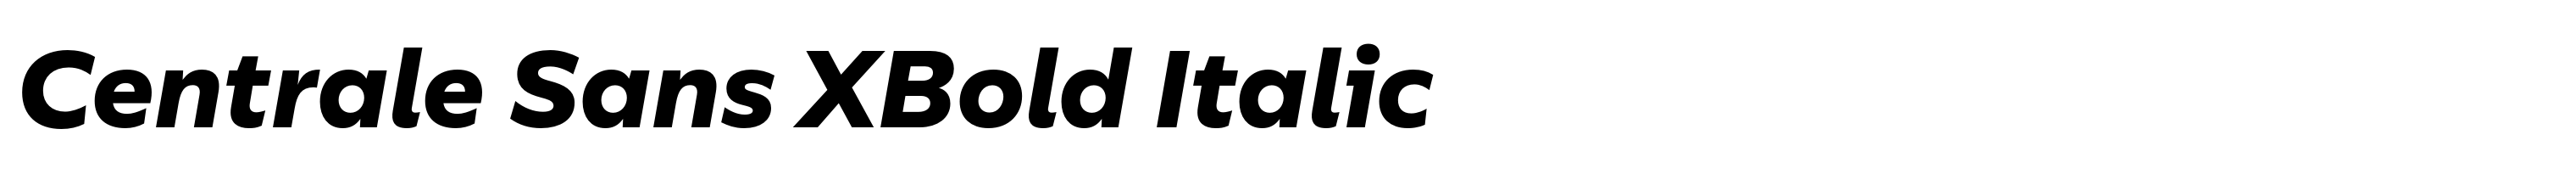 Centrale Sans XBold Italic